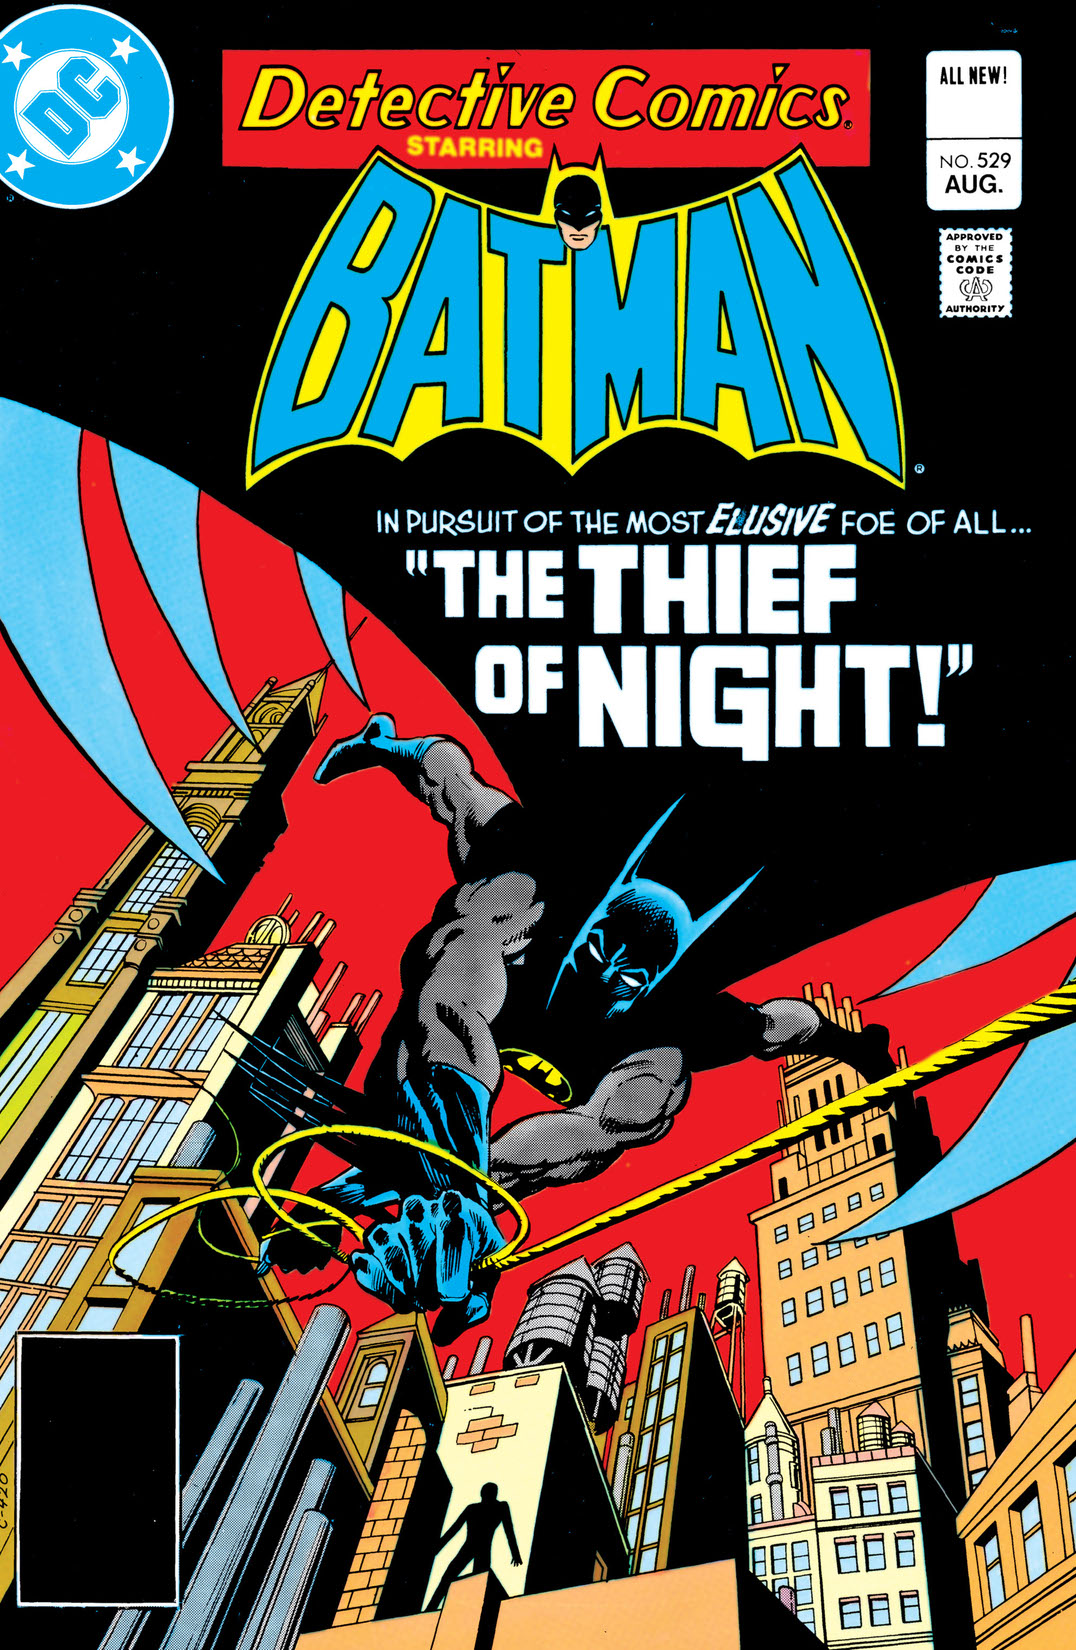 Detective Comics (1937-) #529 preview images